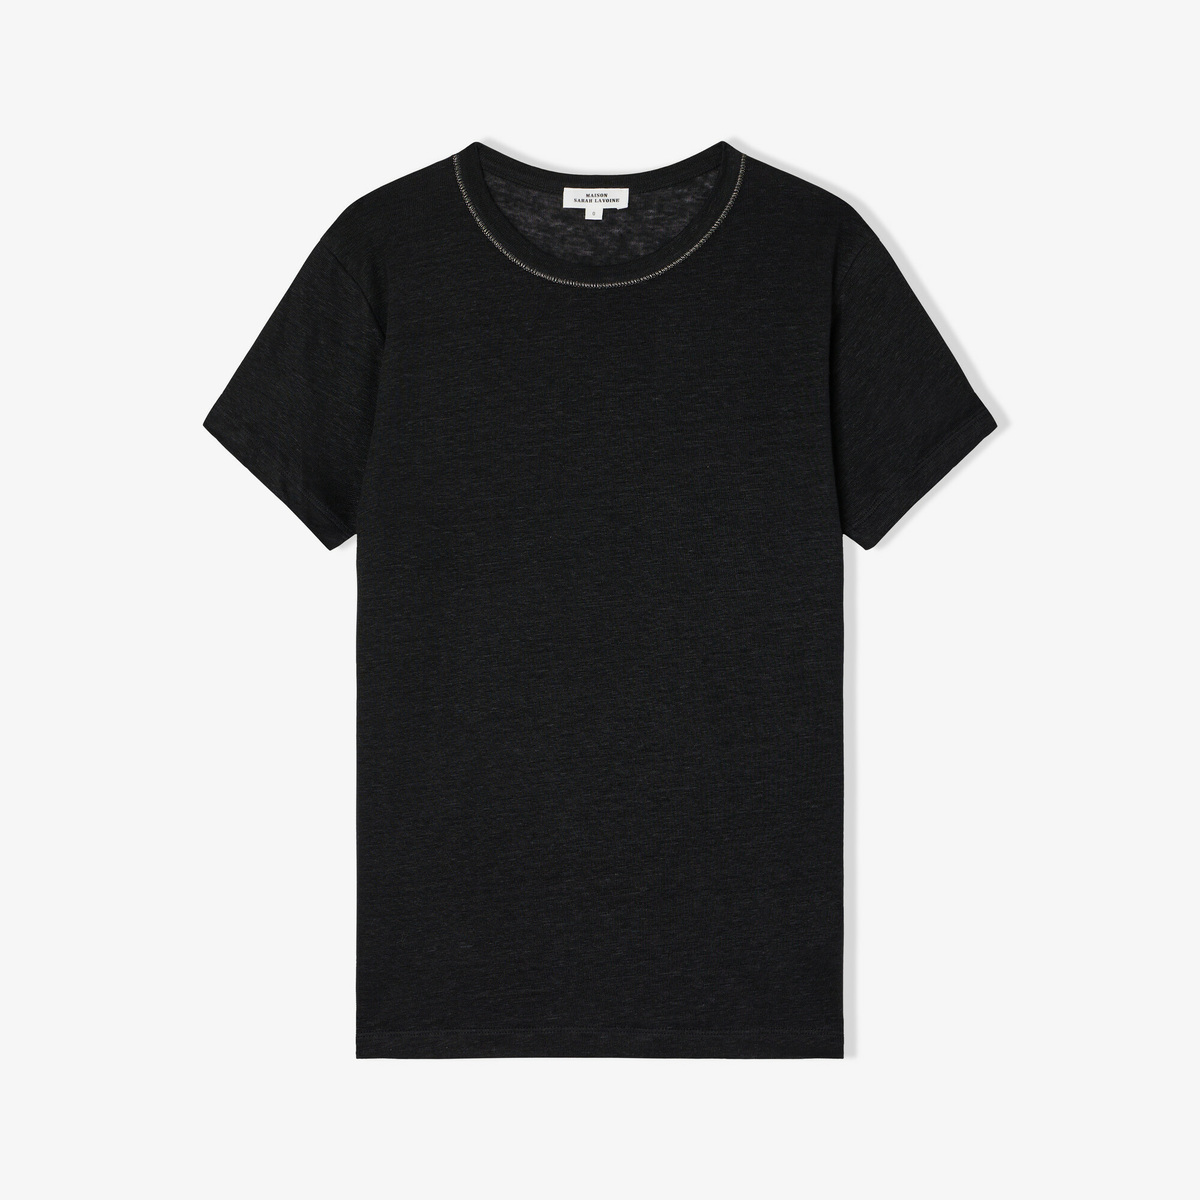 Lina Tee Shirt, Black - Round Neck - 100% Linen - image 4